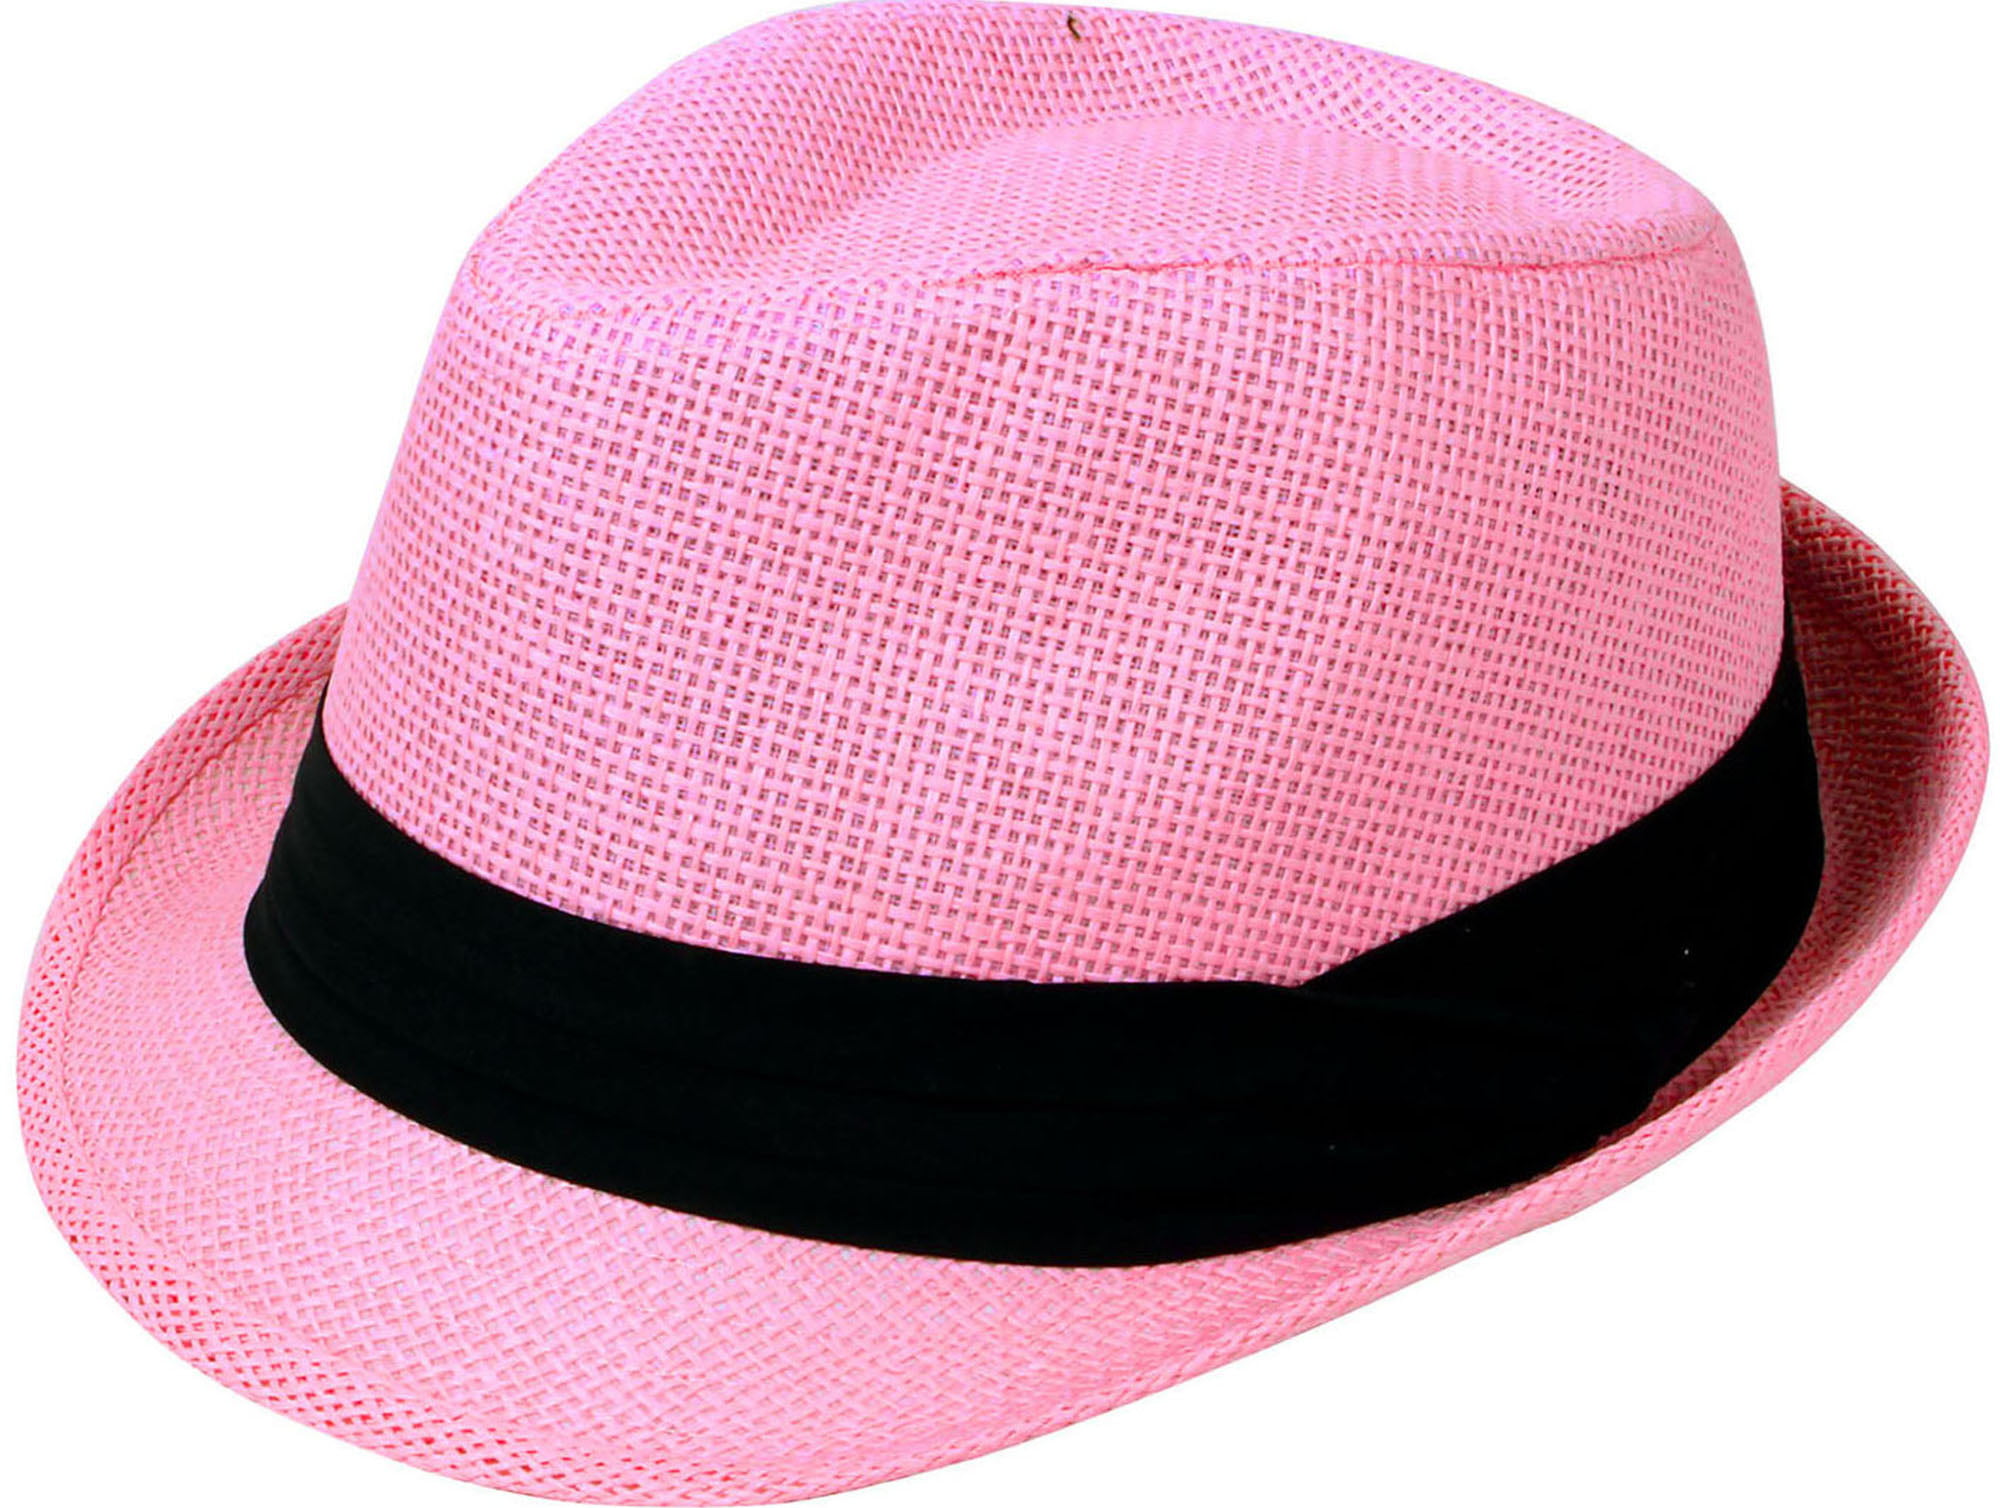 Simplicity Men/Women’s Short Brim Summer Straw Banded Fedora/Trilby Hat